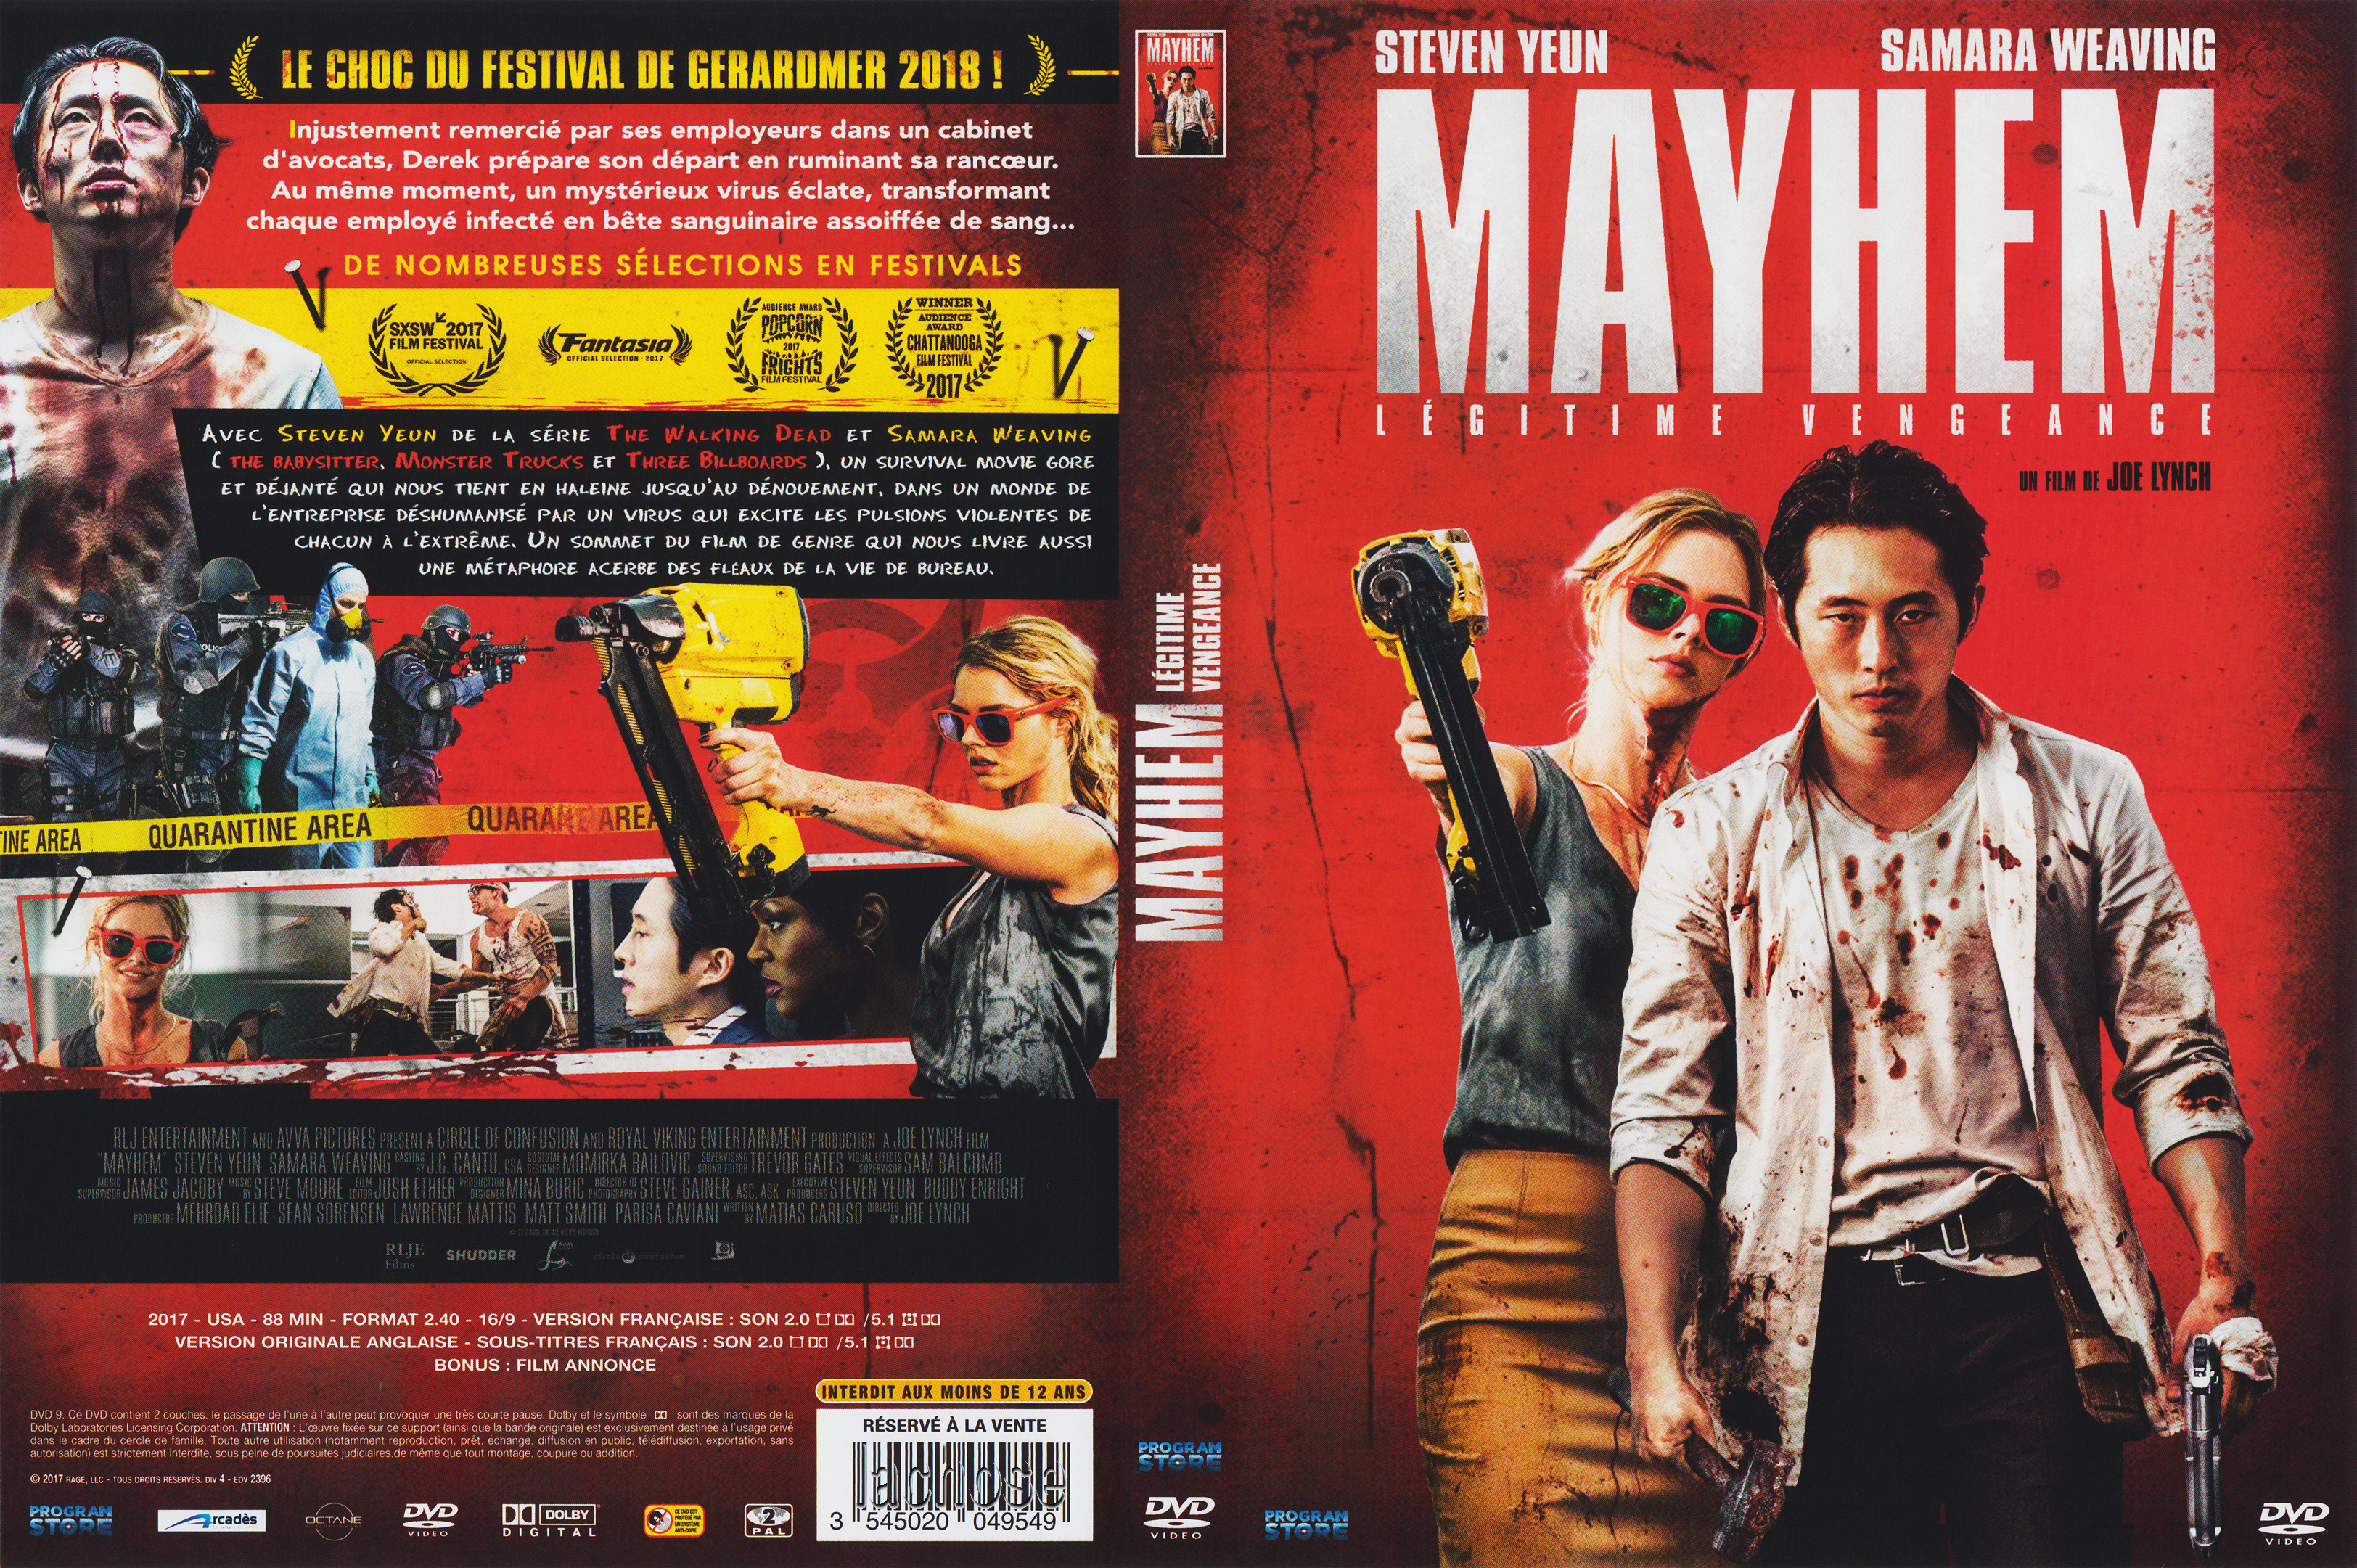 Jaquette DVD Mayhem legitime vengeance